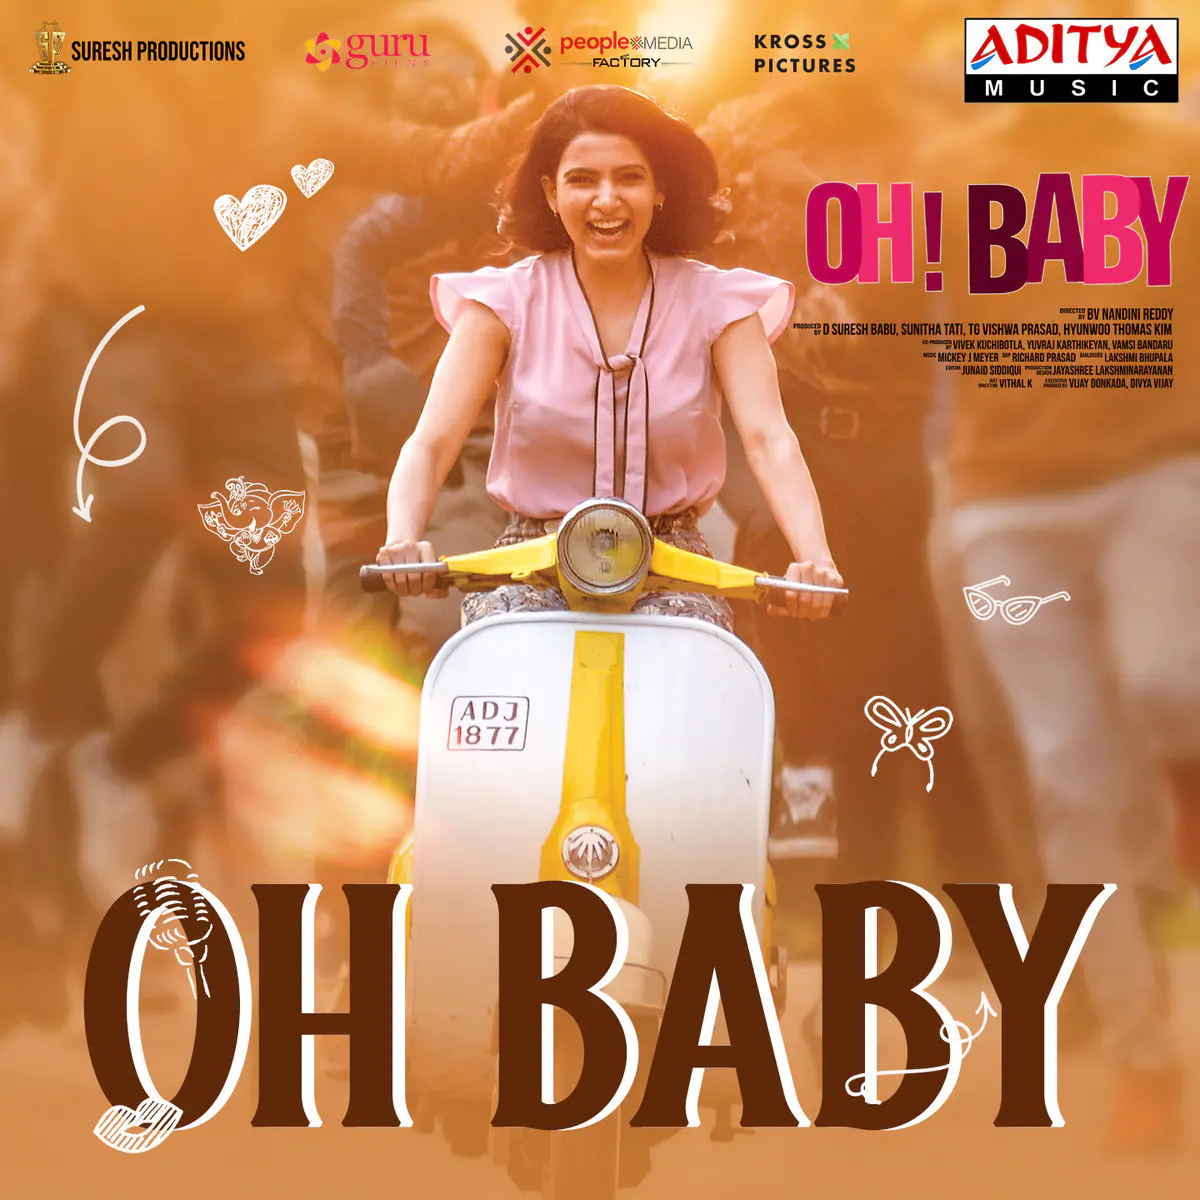 Oh Baby Lyrics In Telugu Oh Baby Oh Baby Song Lyrics In English Free Online On Gaana Com